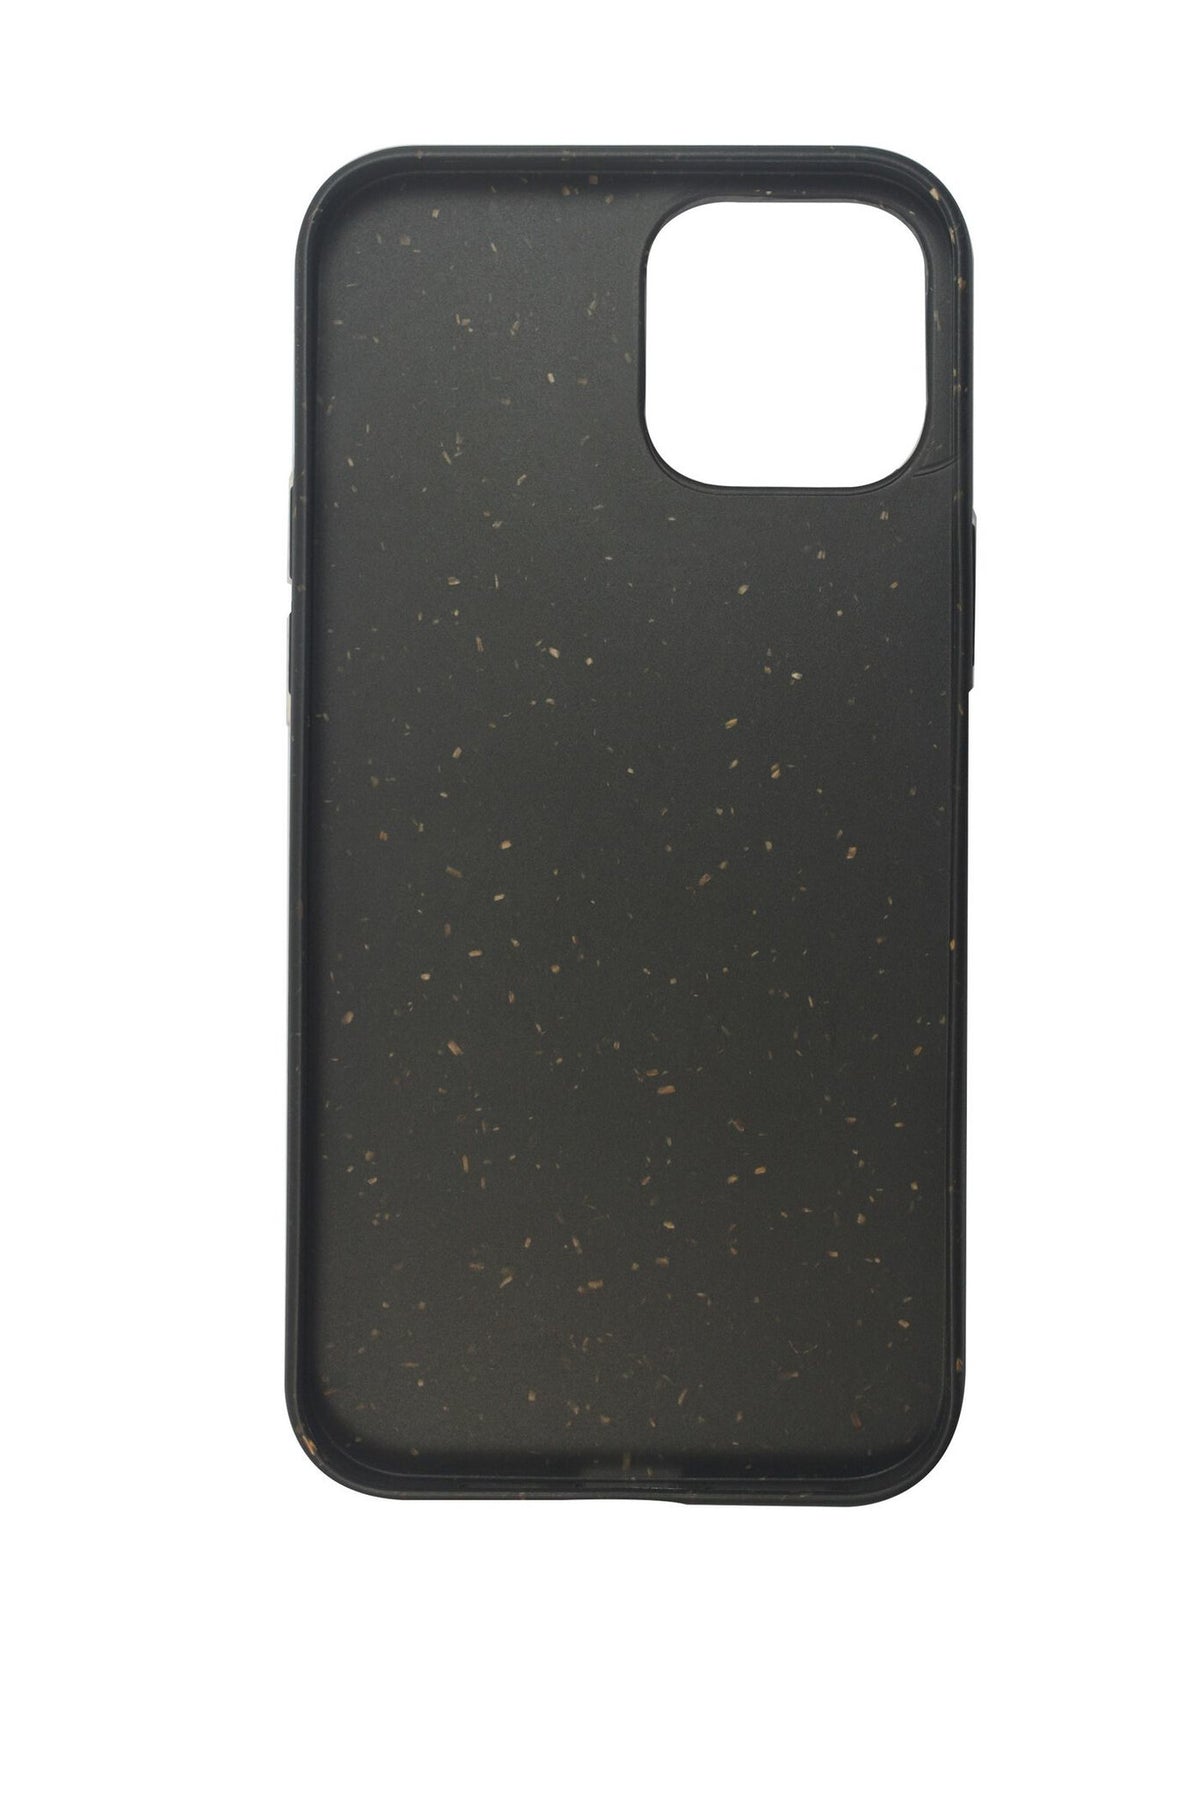 eSTUFF COPENHAGEN 100% Biodegradable mobile phone case for iPhone 13 in Black